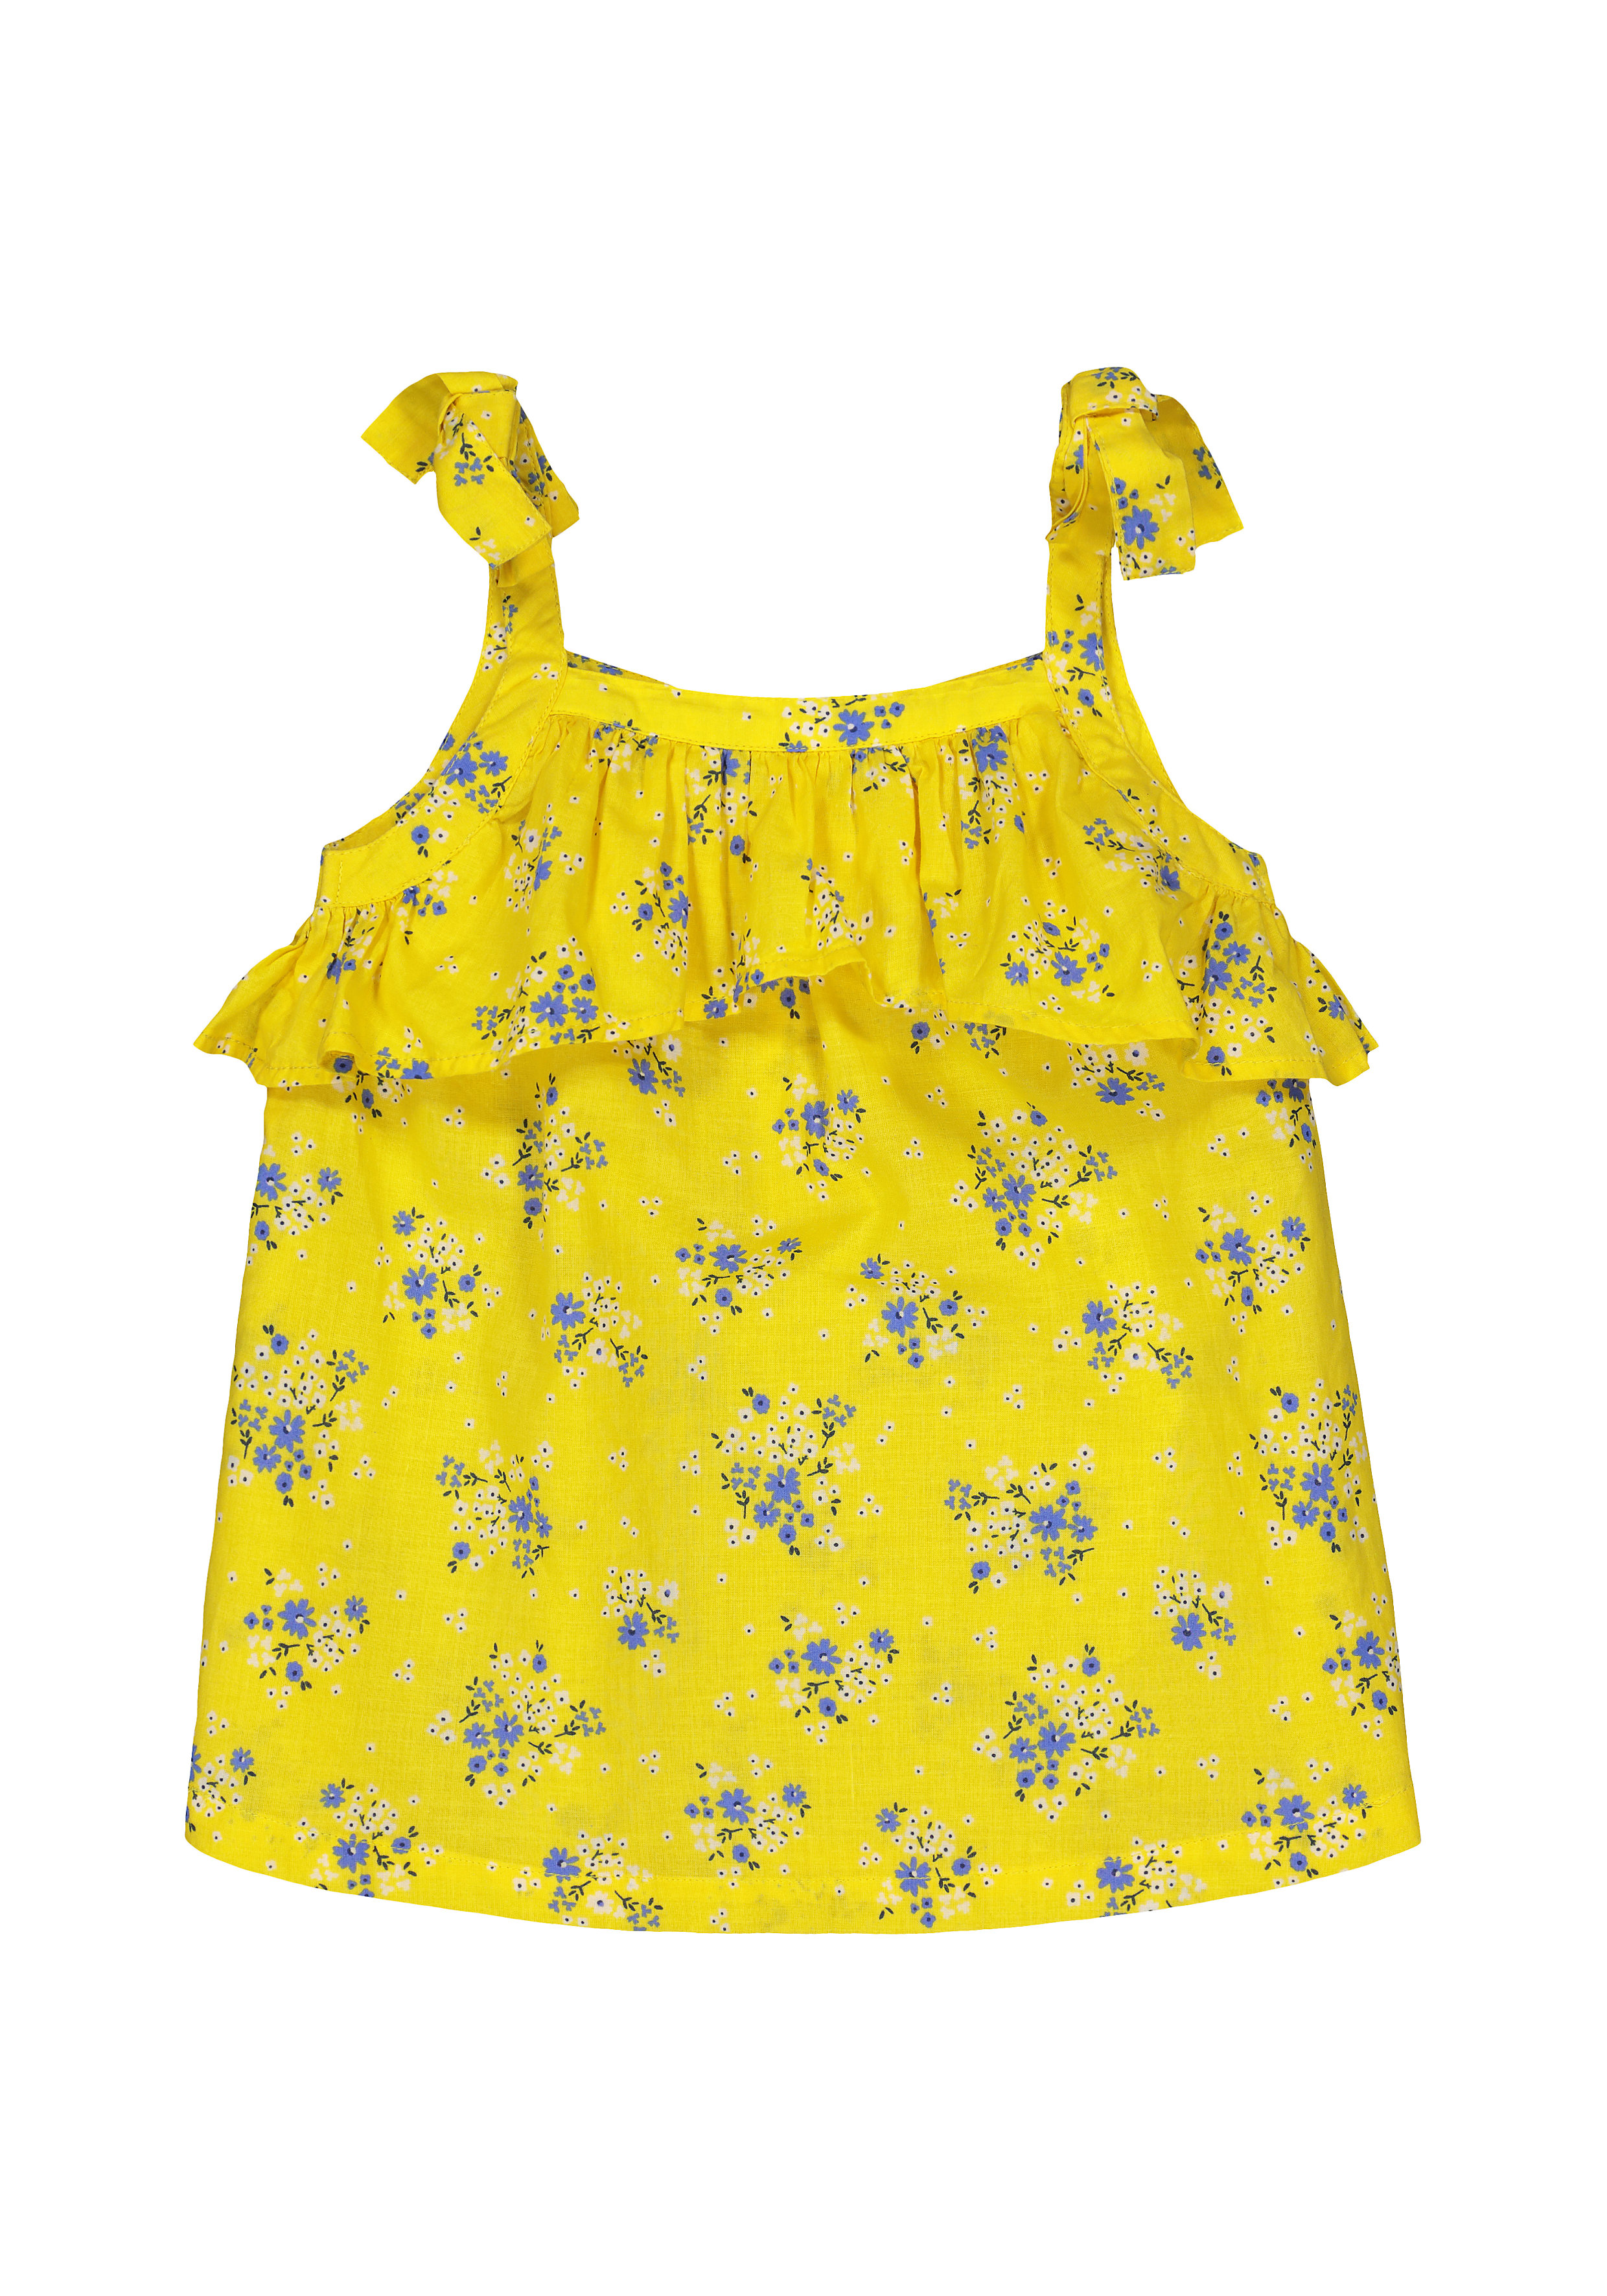 Mothercare Girls Printed Yellow Top